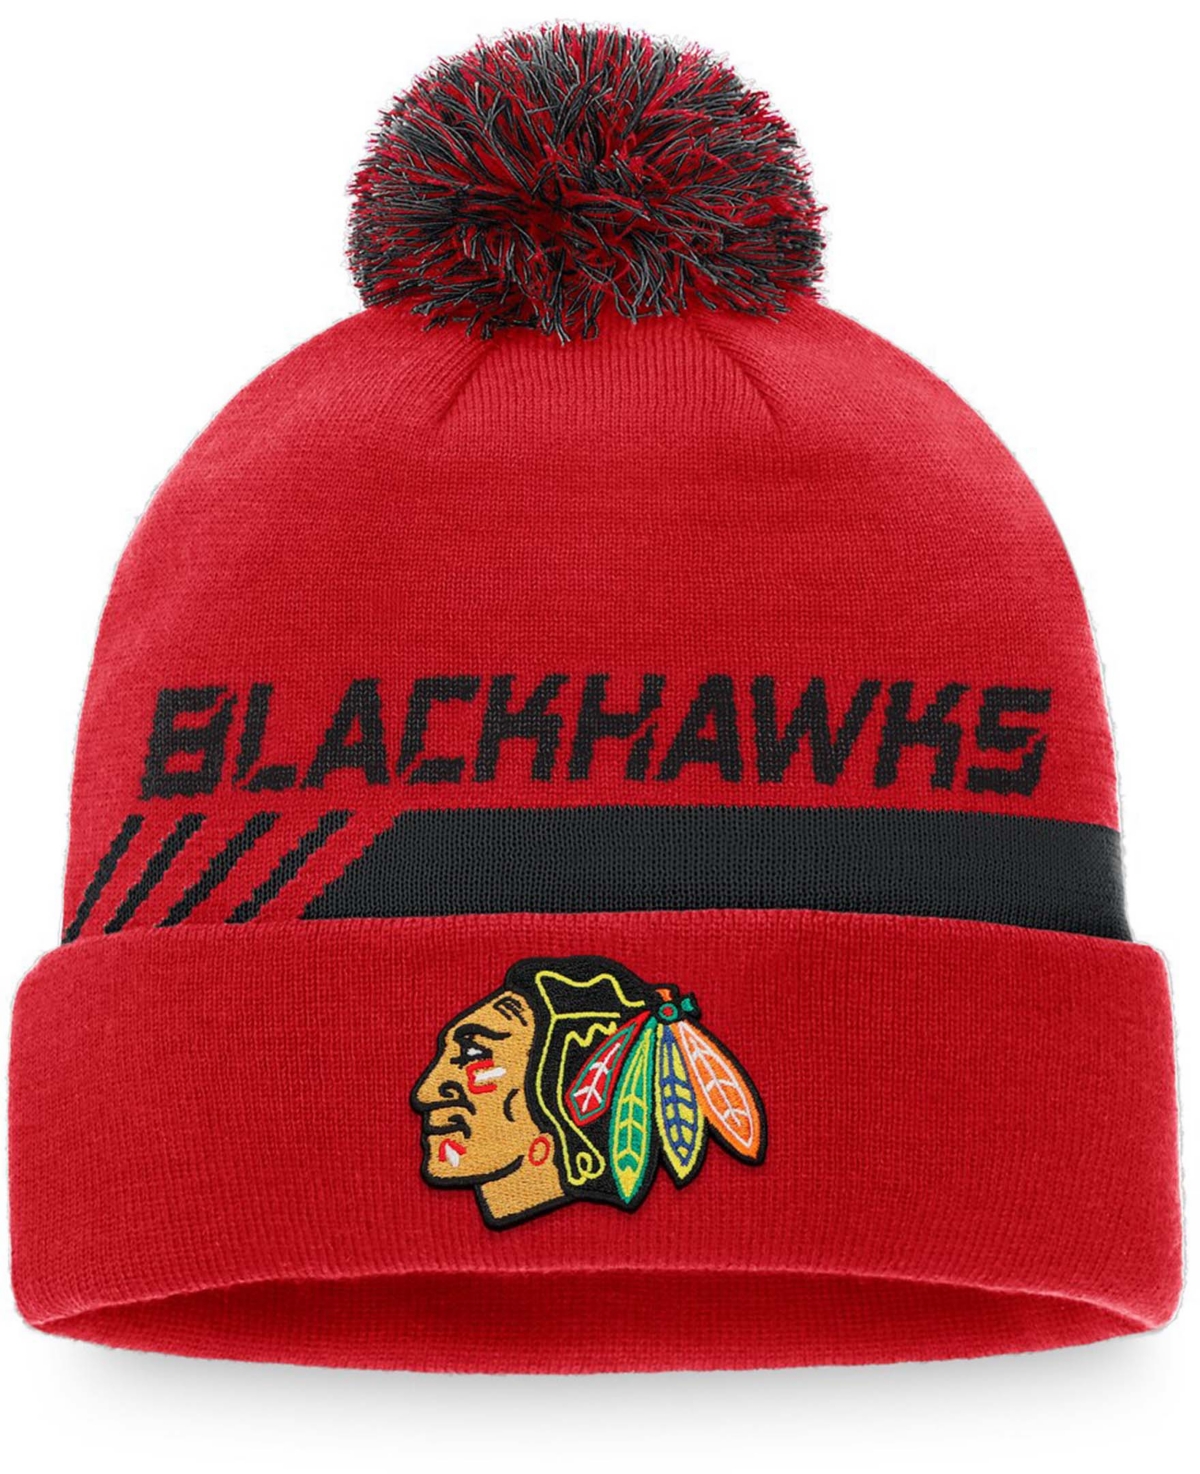 Men's Fanatics Branded Red/Black Chicago Blackhawks Authentic Pro Team Locker Room Cuffed Knit Hat With Pom - Red